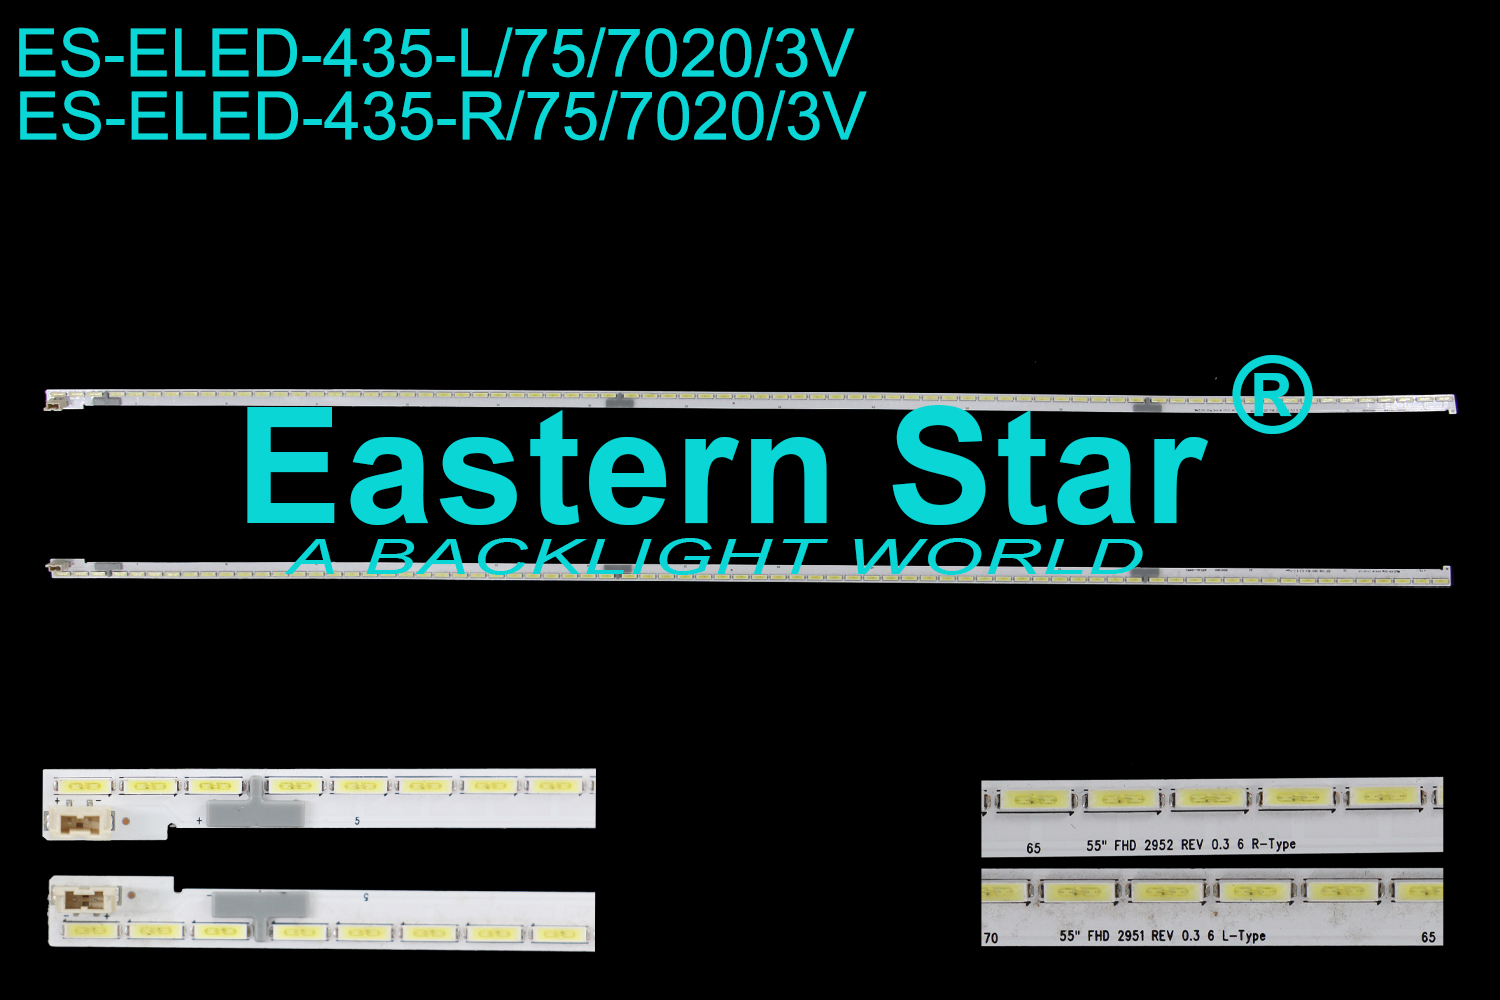 ES-ELED-435 ELED/EDGE TV backlight use for 55'' Lg 55" FHD 2952 REV 0.3 6 L/R-Type LED STRIPS(2）